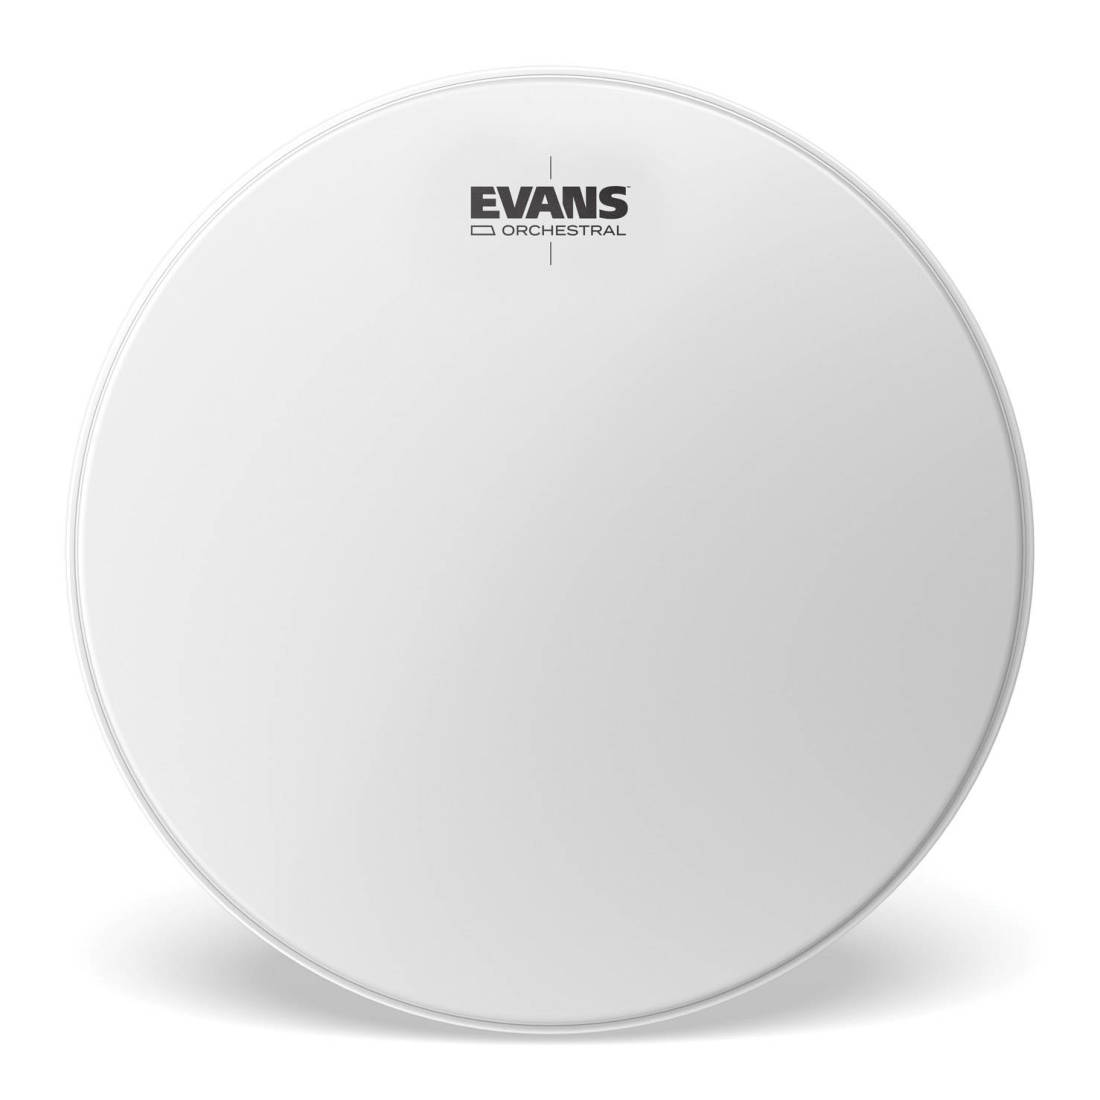 ET2450 - Evans Orchestral Timpani Drum Head, 24.5 inch